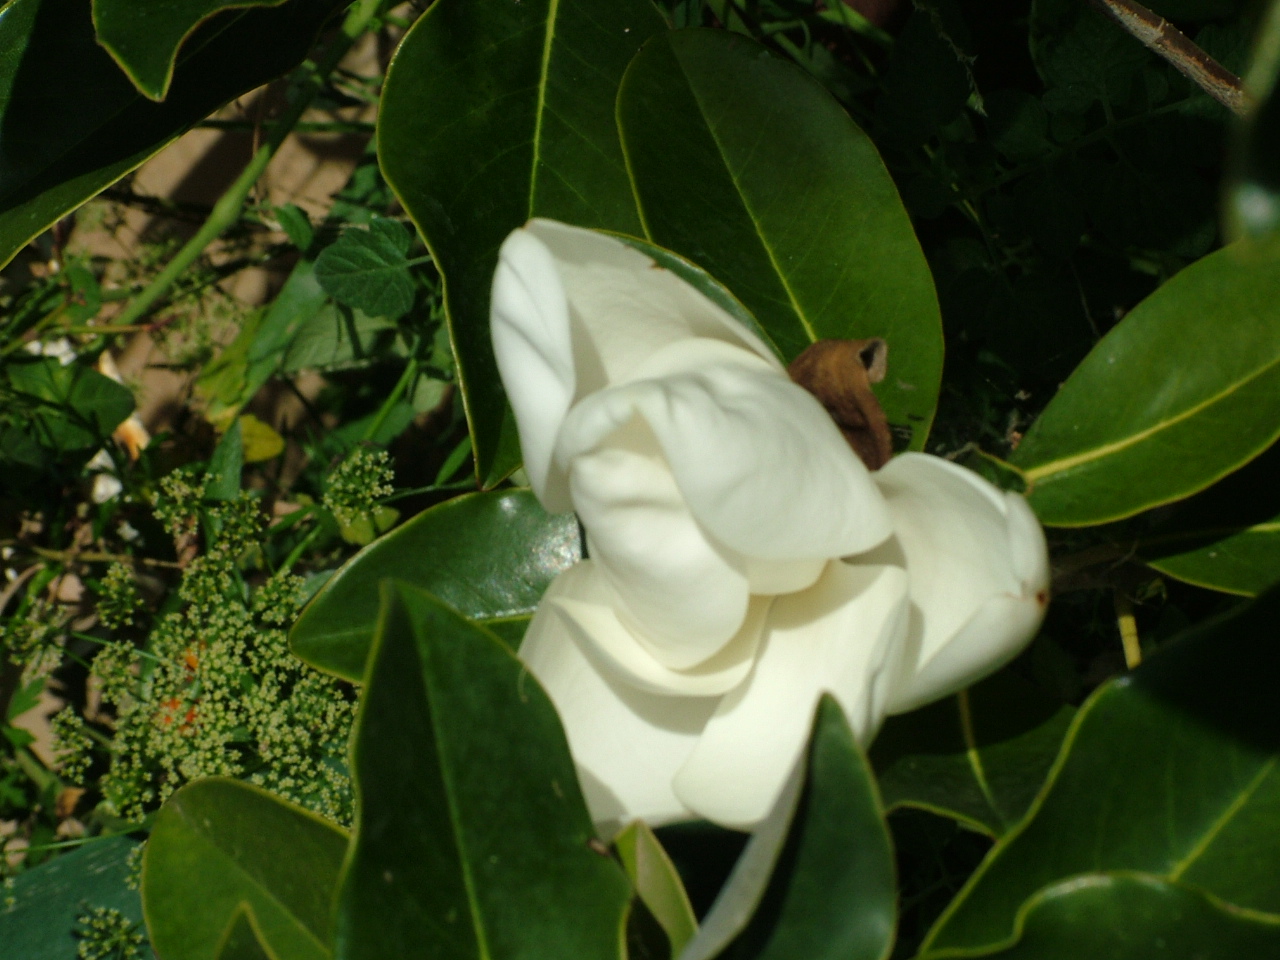 [magnolia.JPG]